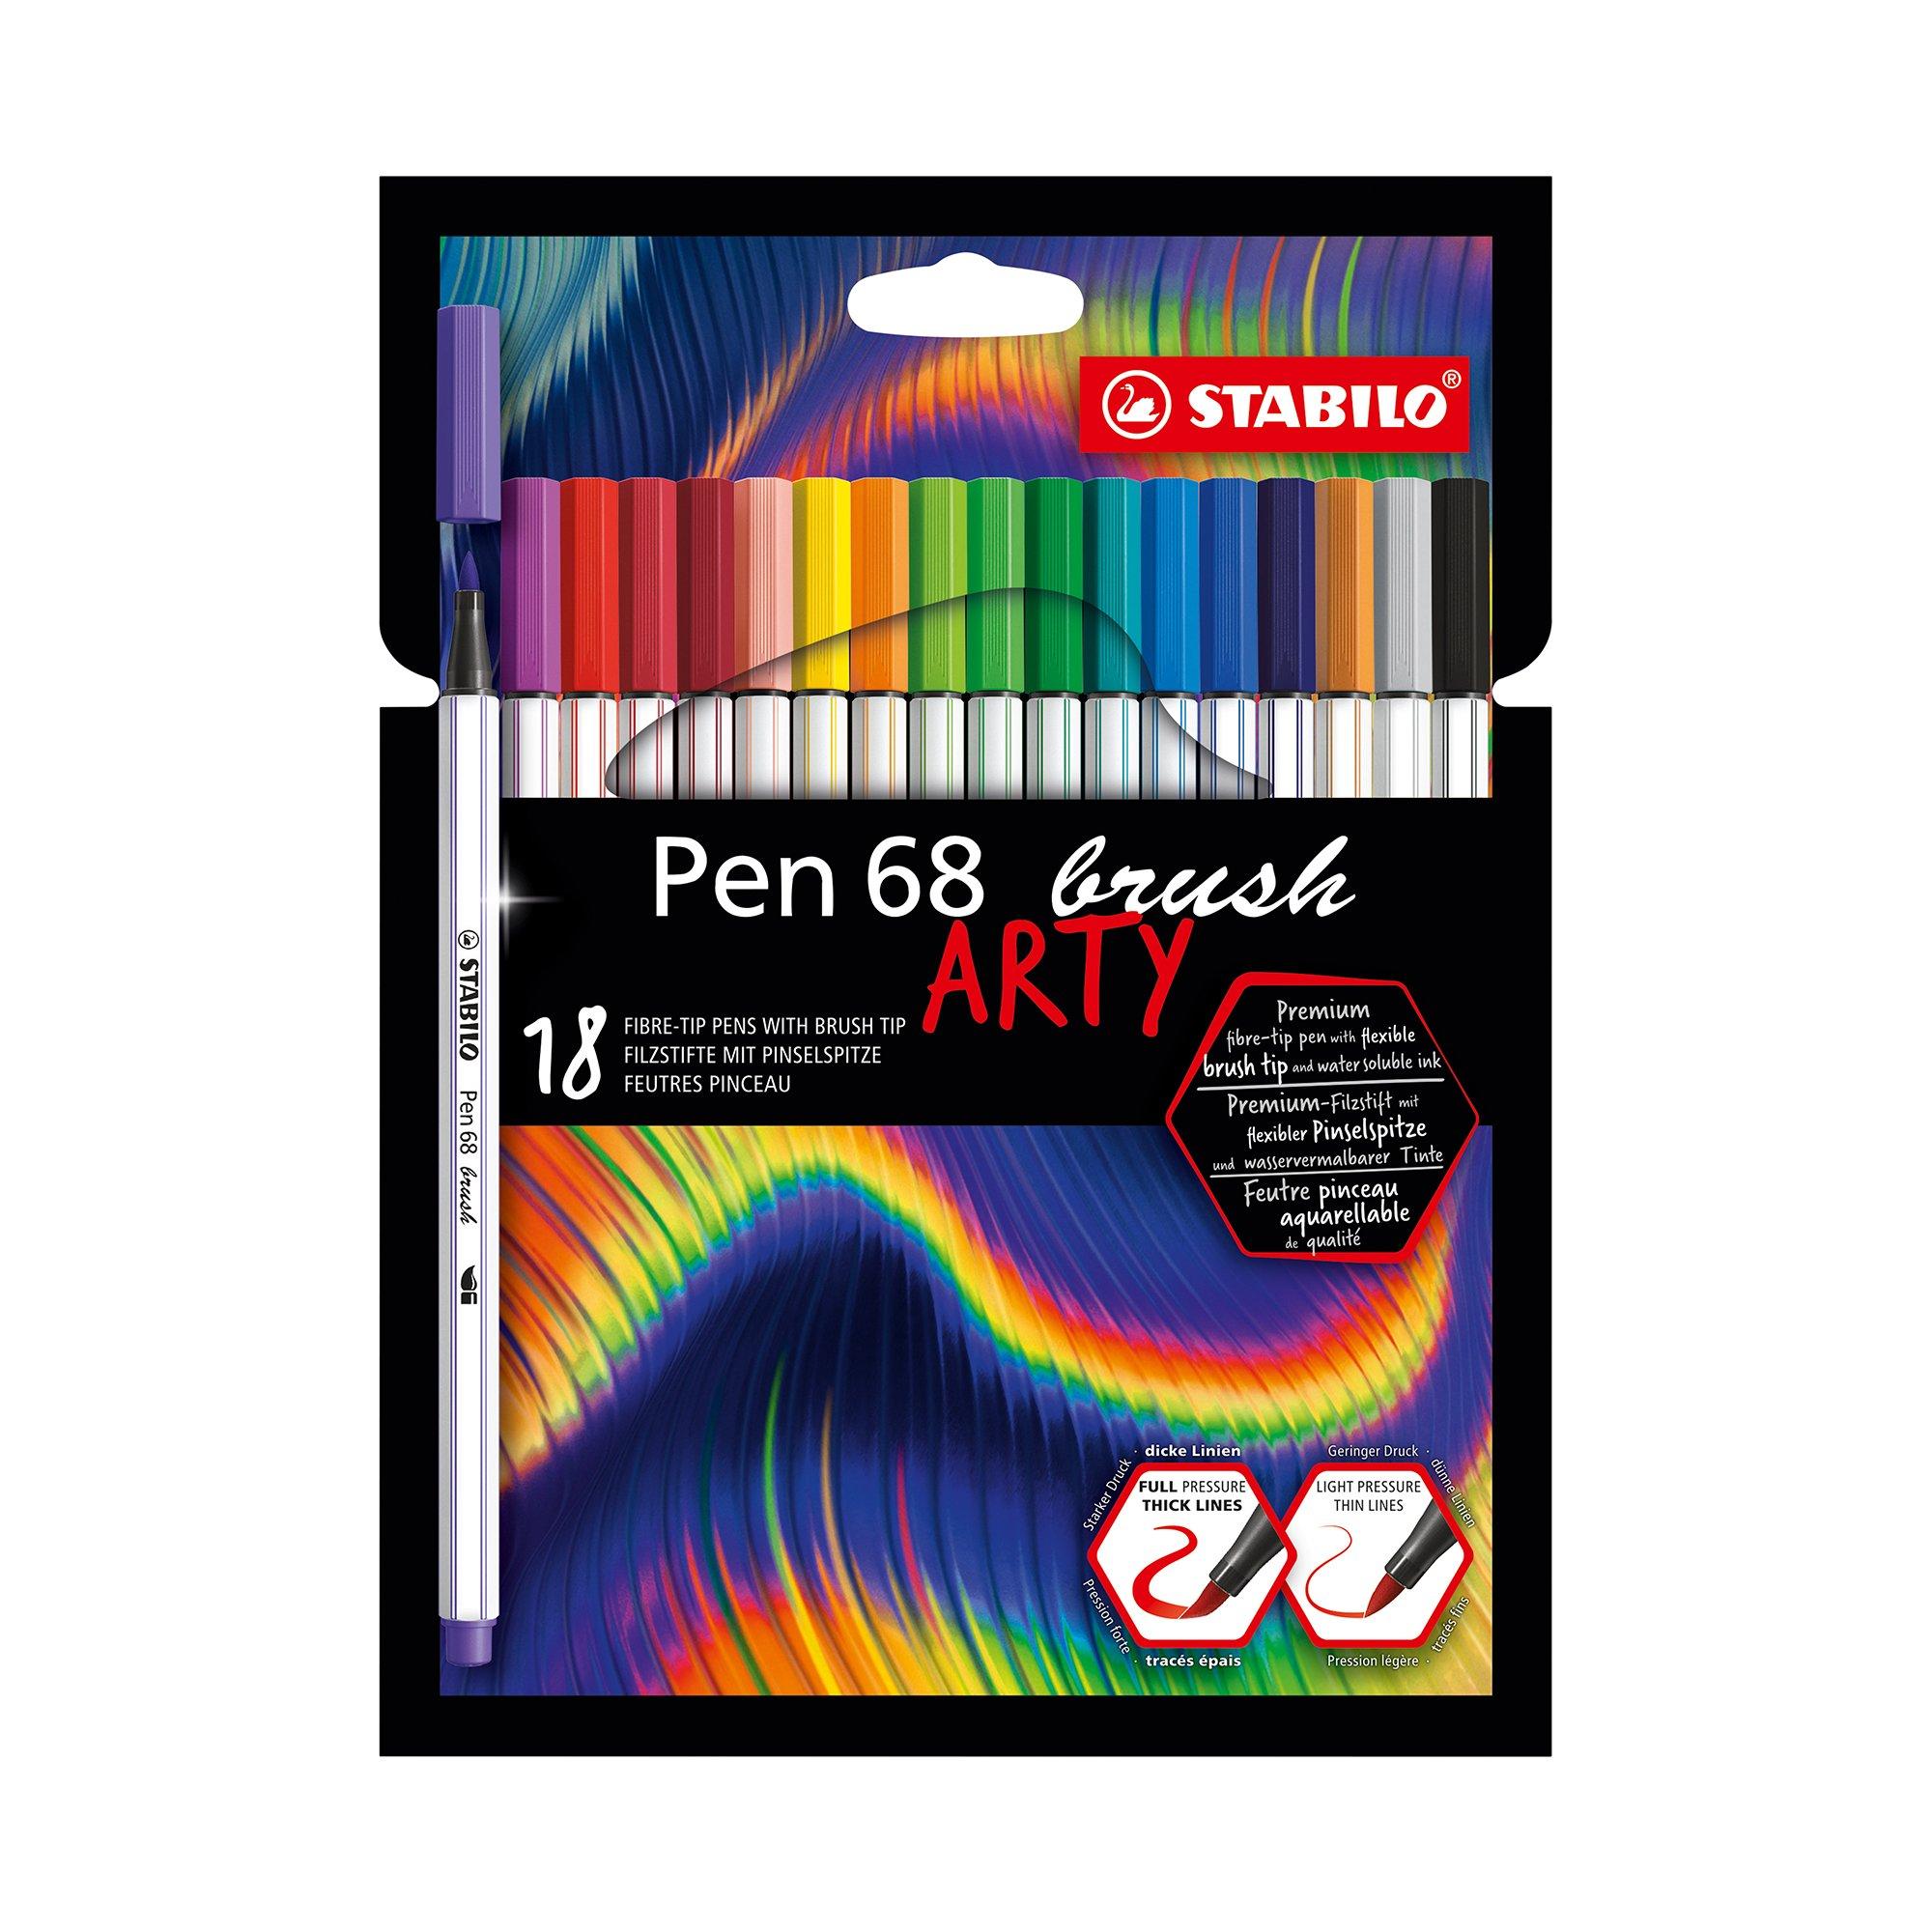 Arty ручки. Stabilo and BIC difference. Stabilo Arty 65 купить. Фломастеры "Pen 68", 18 цветов. Pen to say